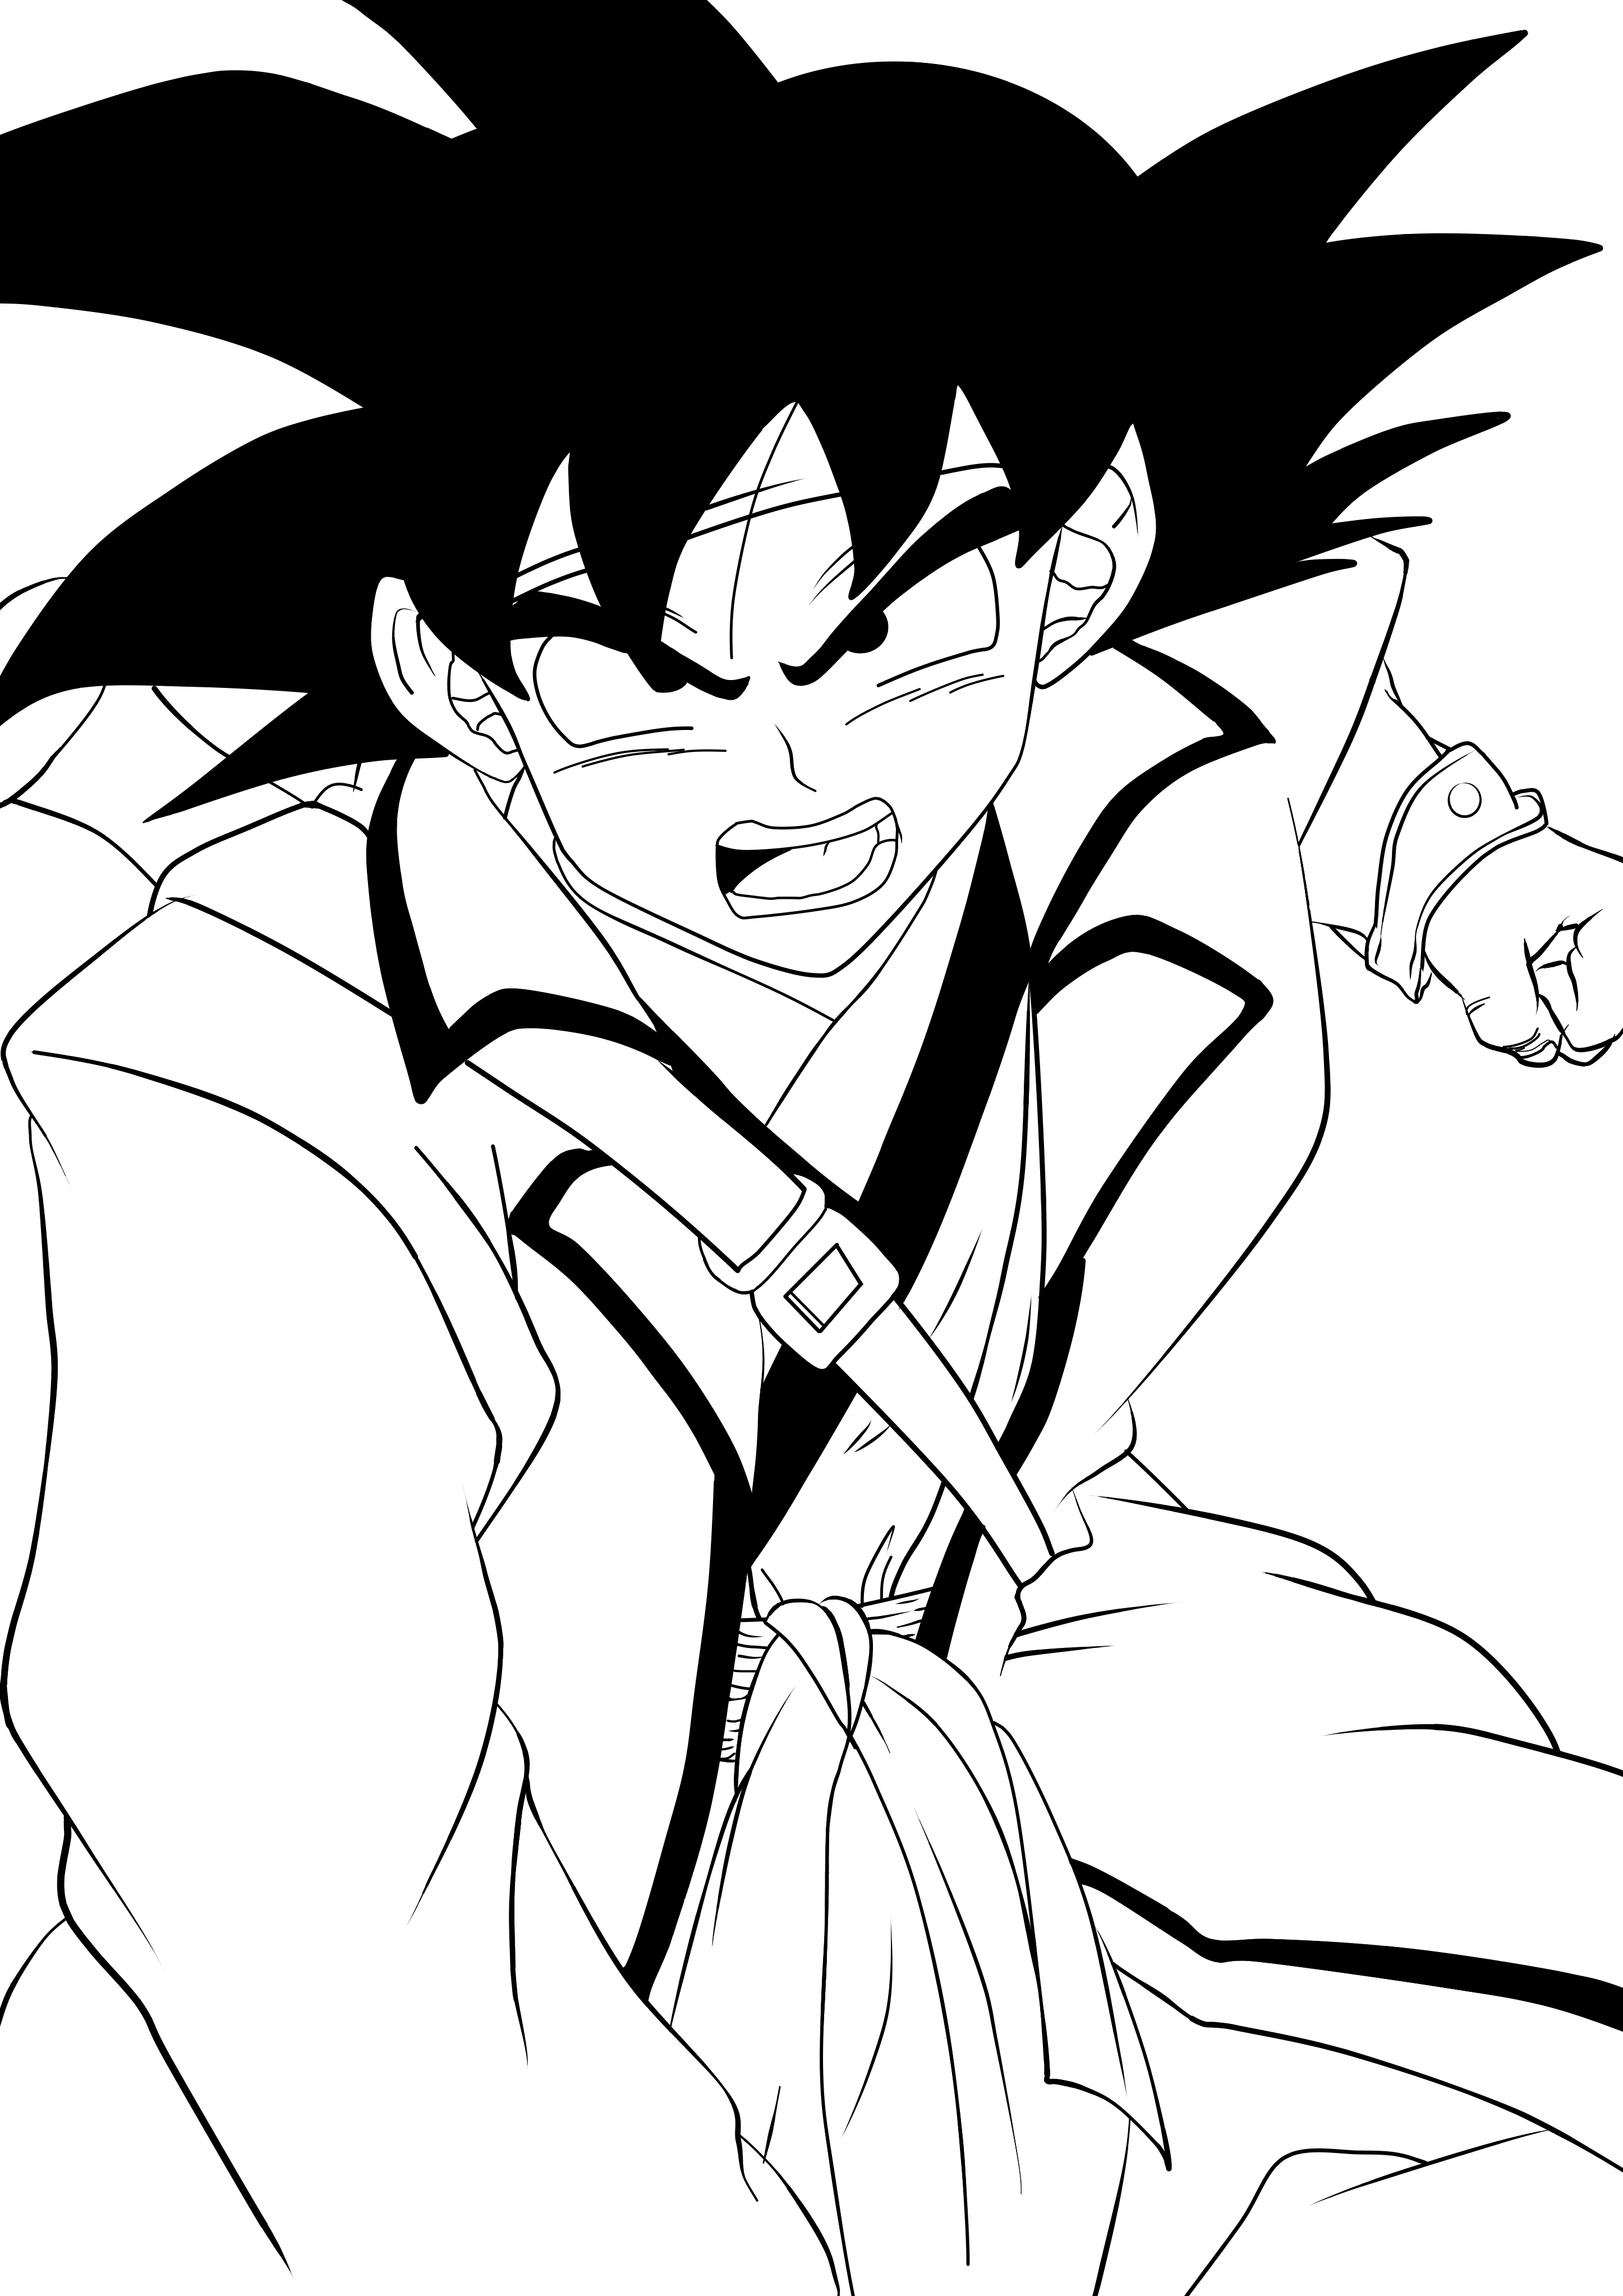 Goku Jr (kai) Adolescente. by SonGokuJr199 on DeviantArt